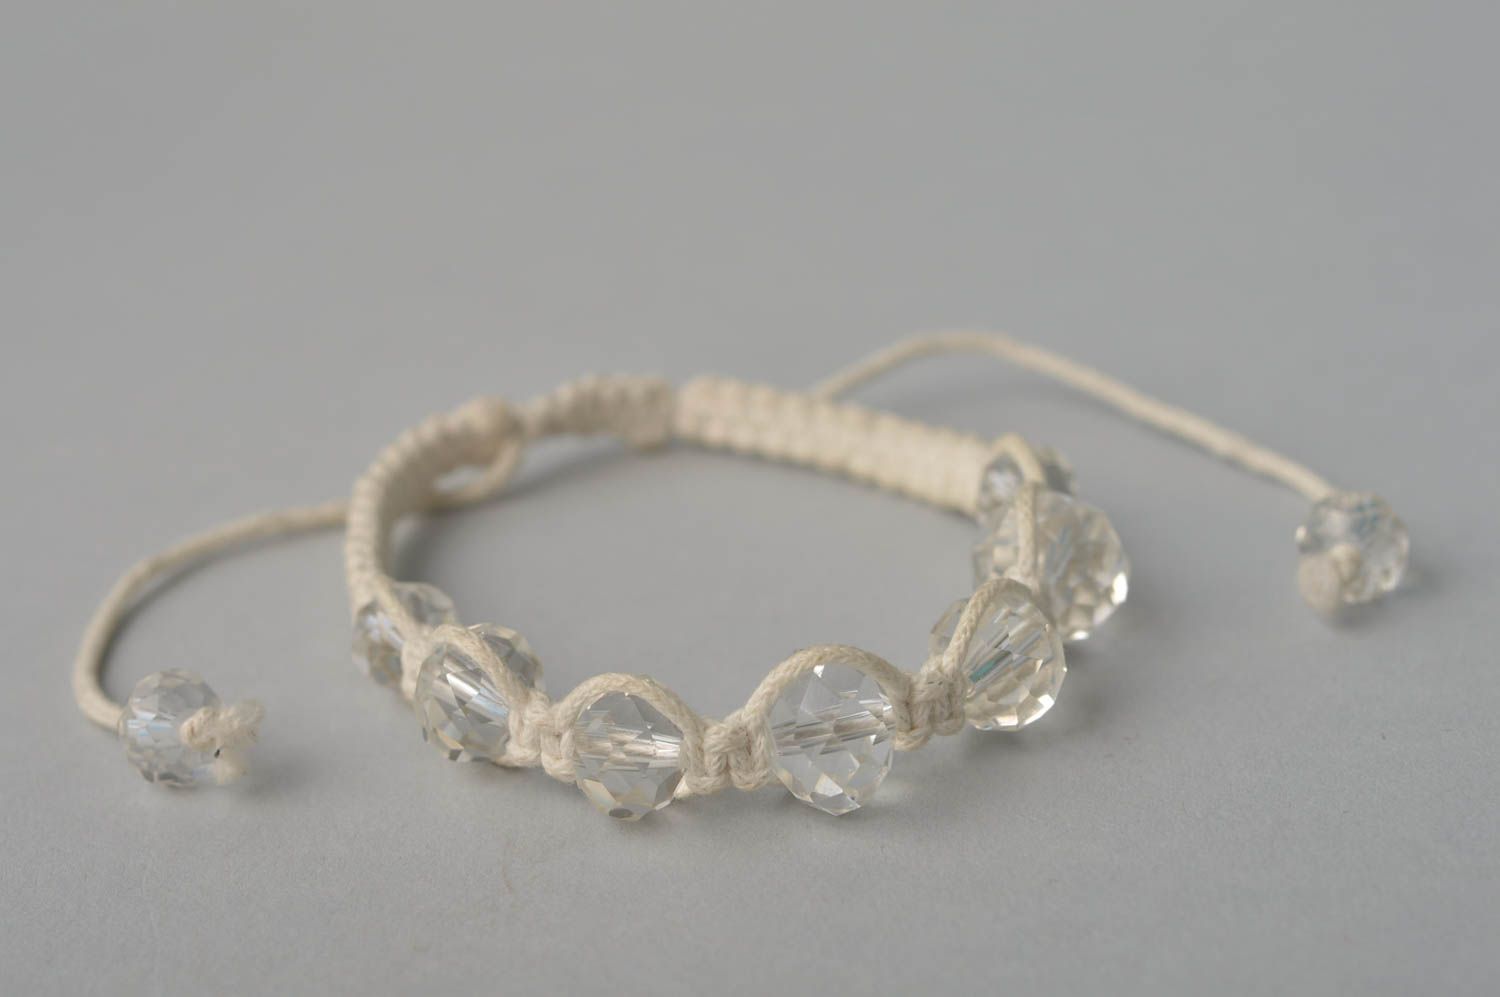 Handmade bracelet bead jewelry cord bracelet designer accessories gifts for her photo 2